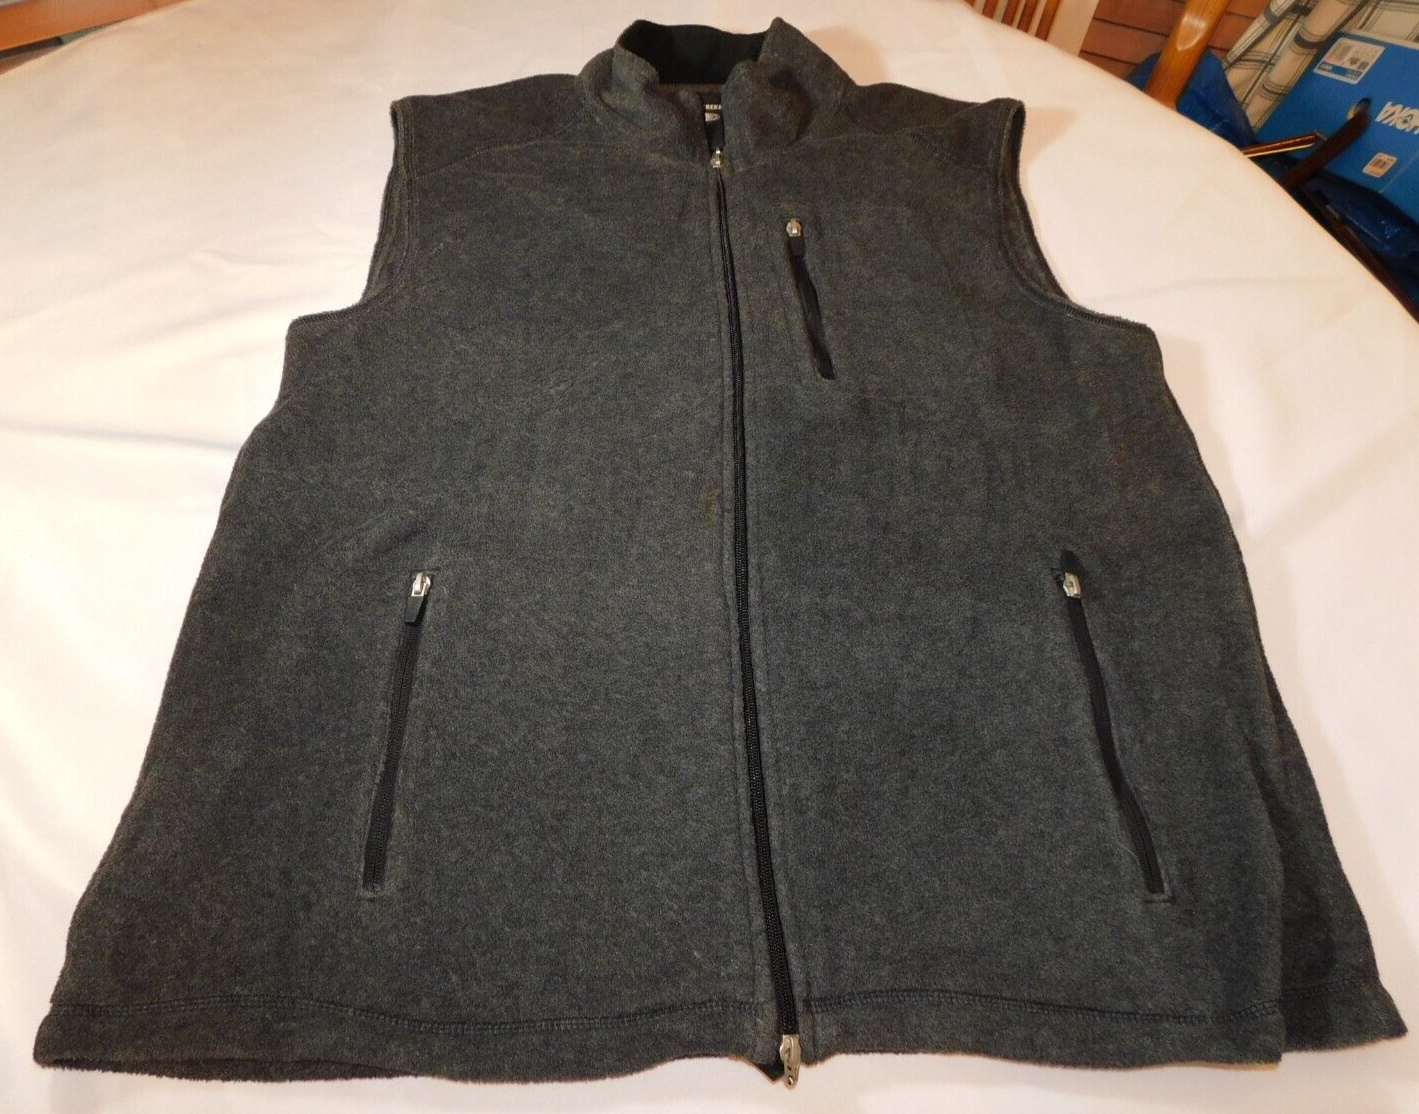 Primary image for Reel Legends Men's Vest Sleeveless Jacket Size L large Zip Up GUC